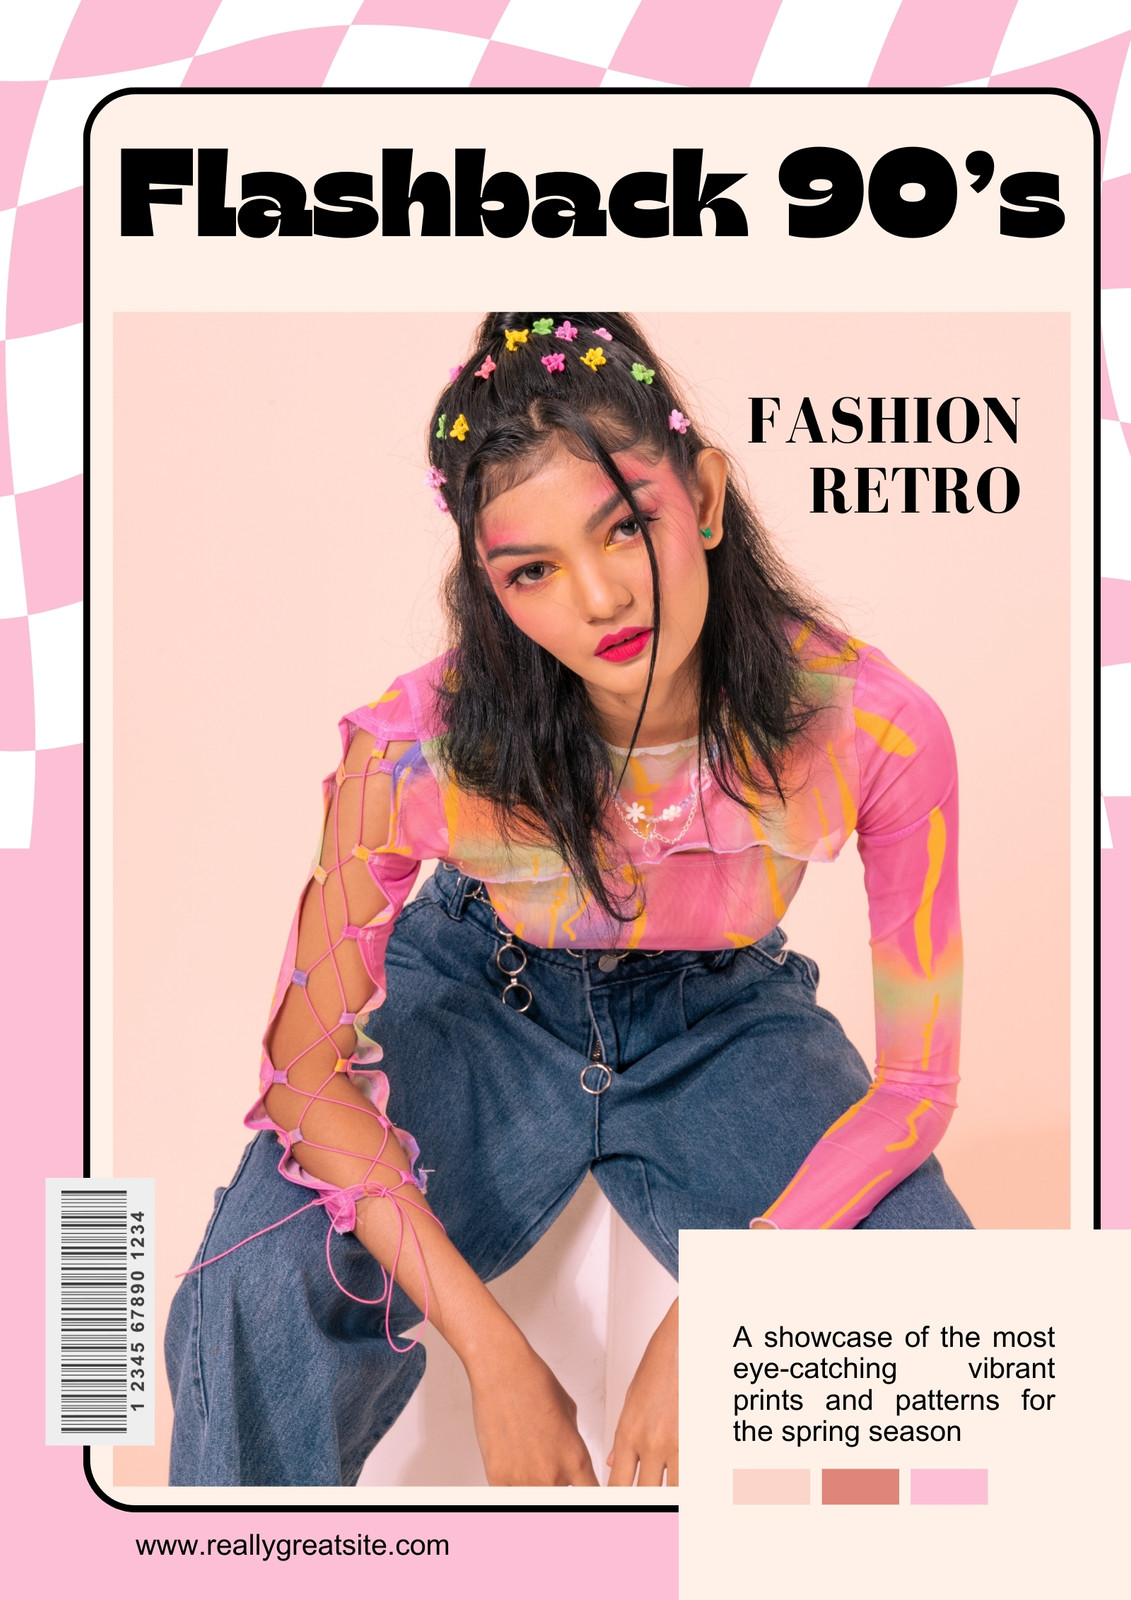 Free, printable, editable fashion magazine cover templates